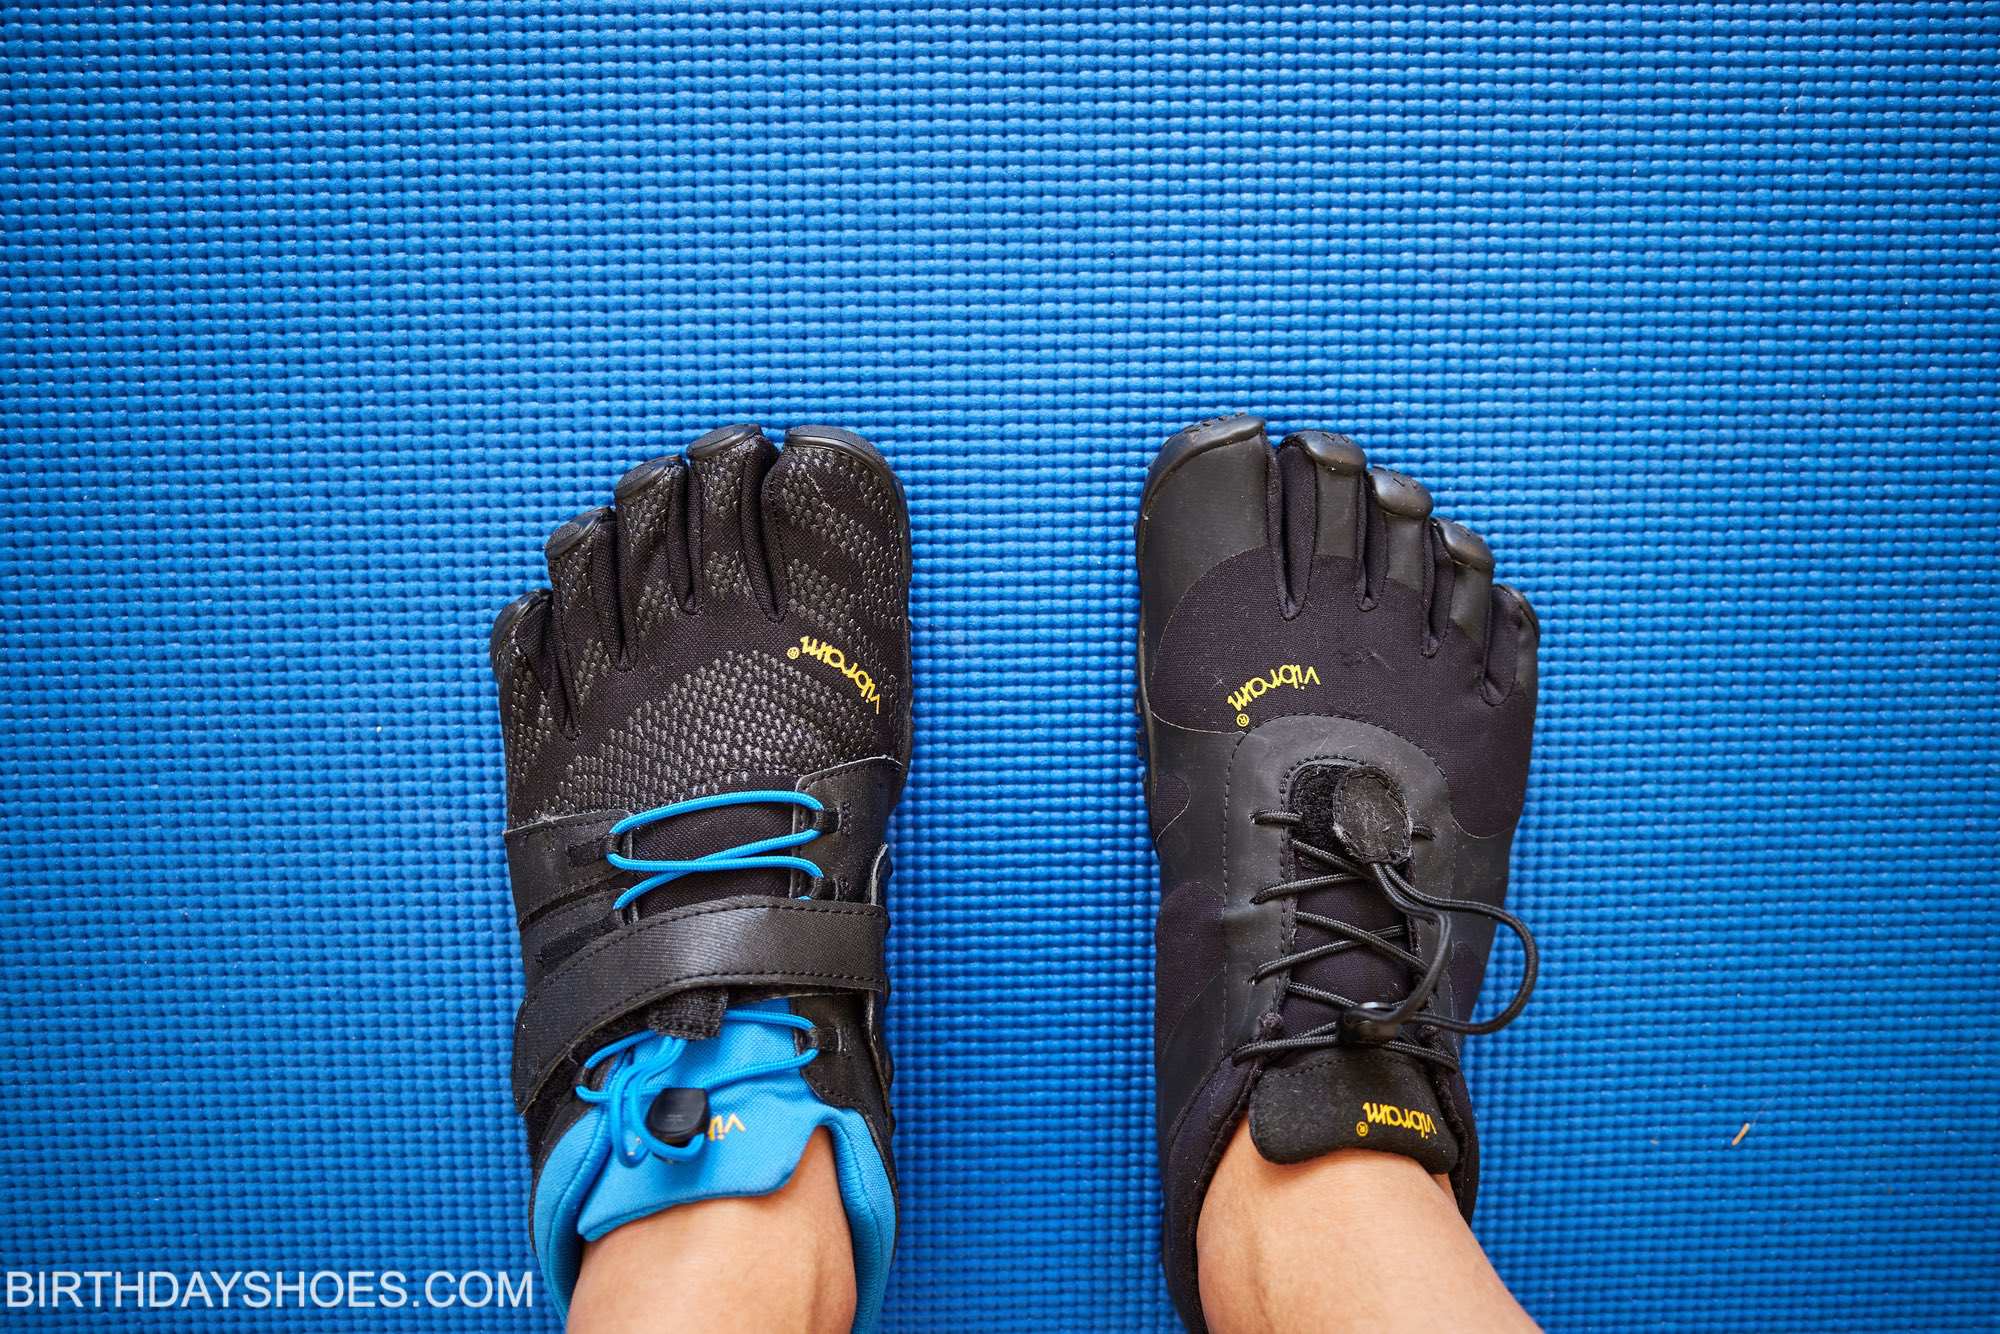 Vibram V-Train Five Fingers Barefoot Feel Grip Training Gym Shoes Trainers 